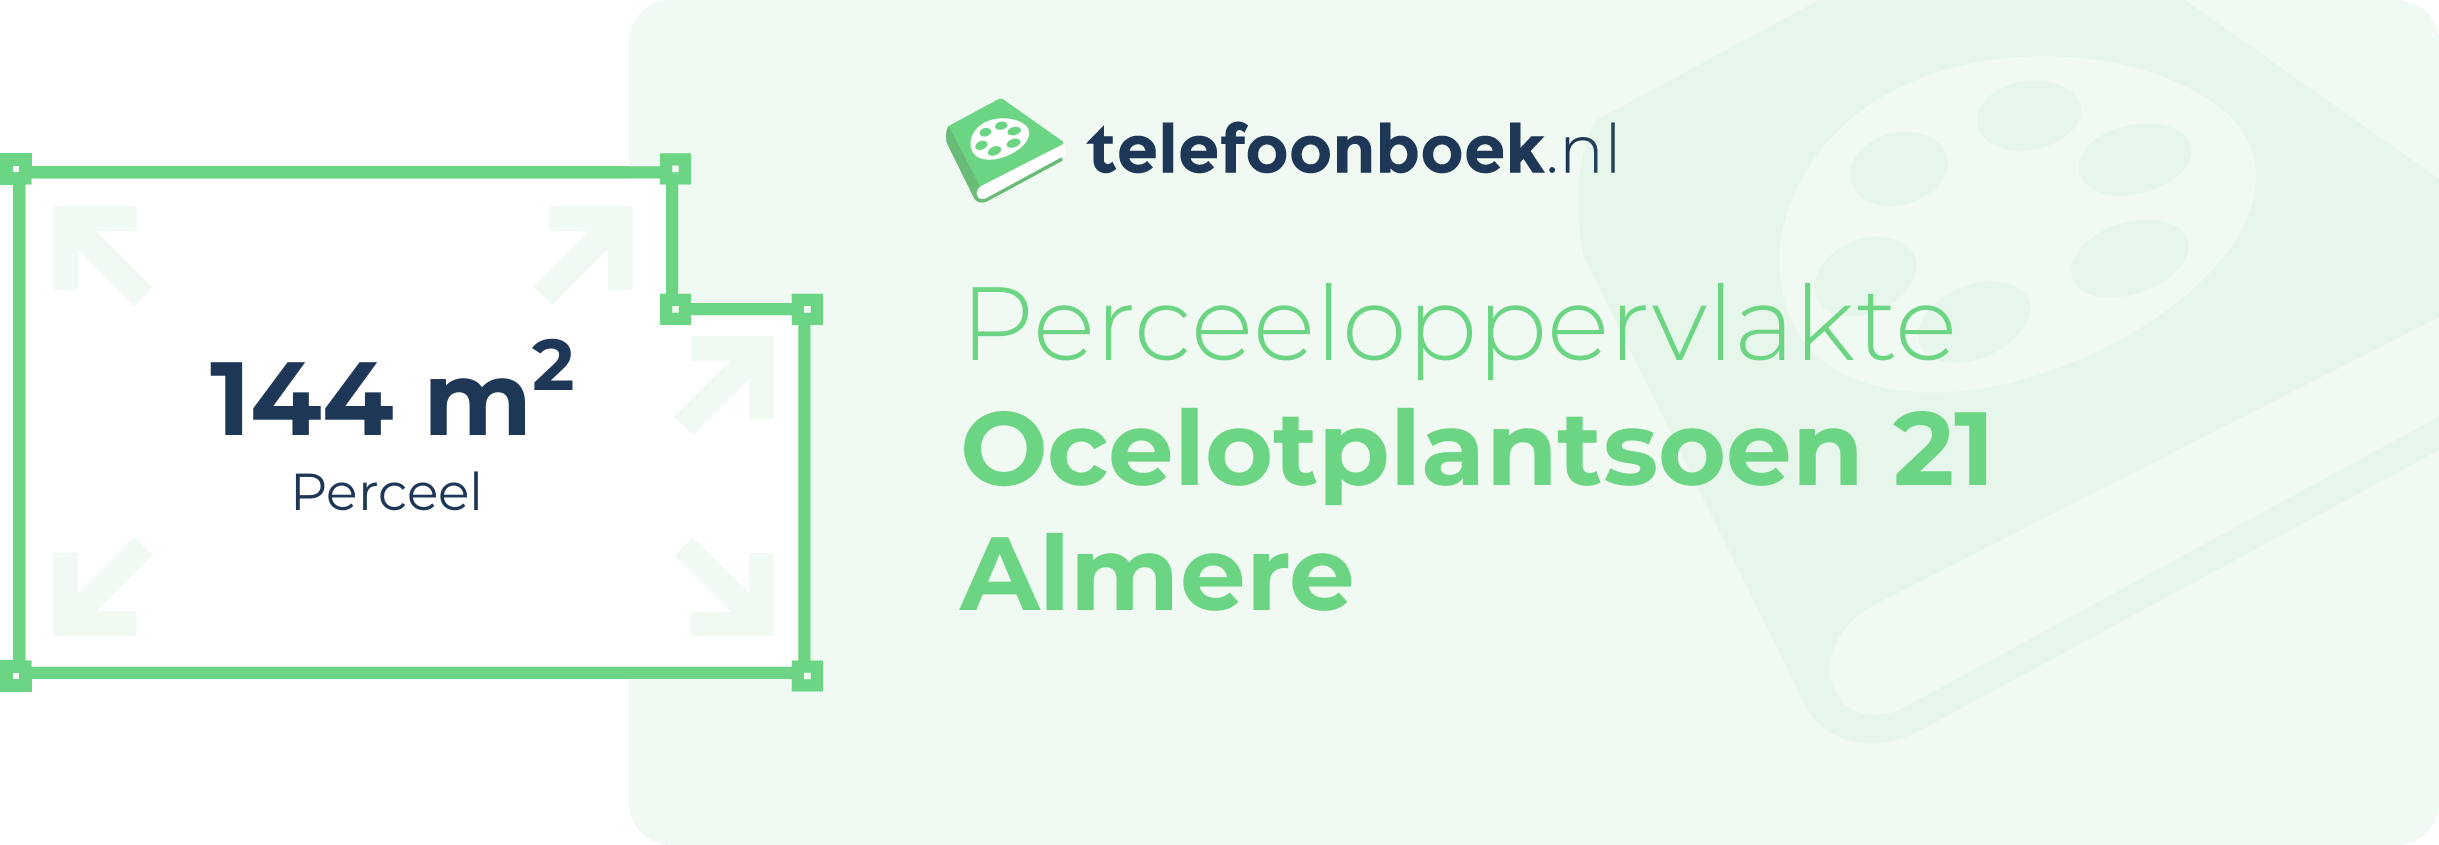 Perceeloppervlakte Ocelotplantsoen 21 Almere